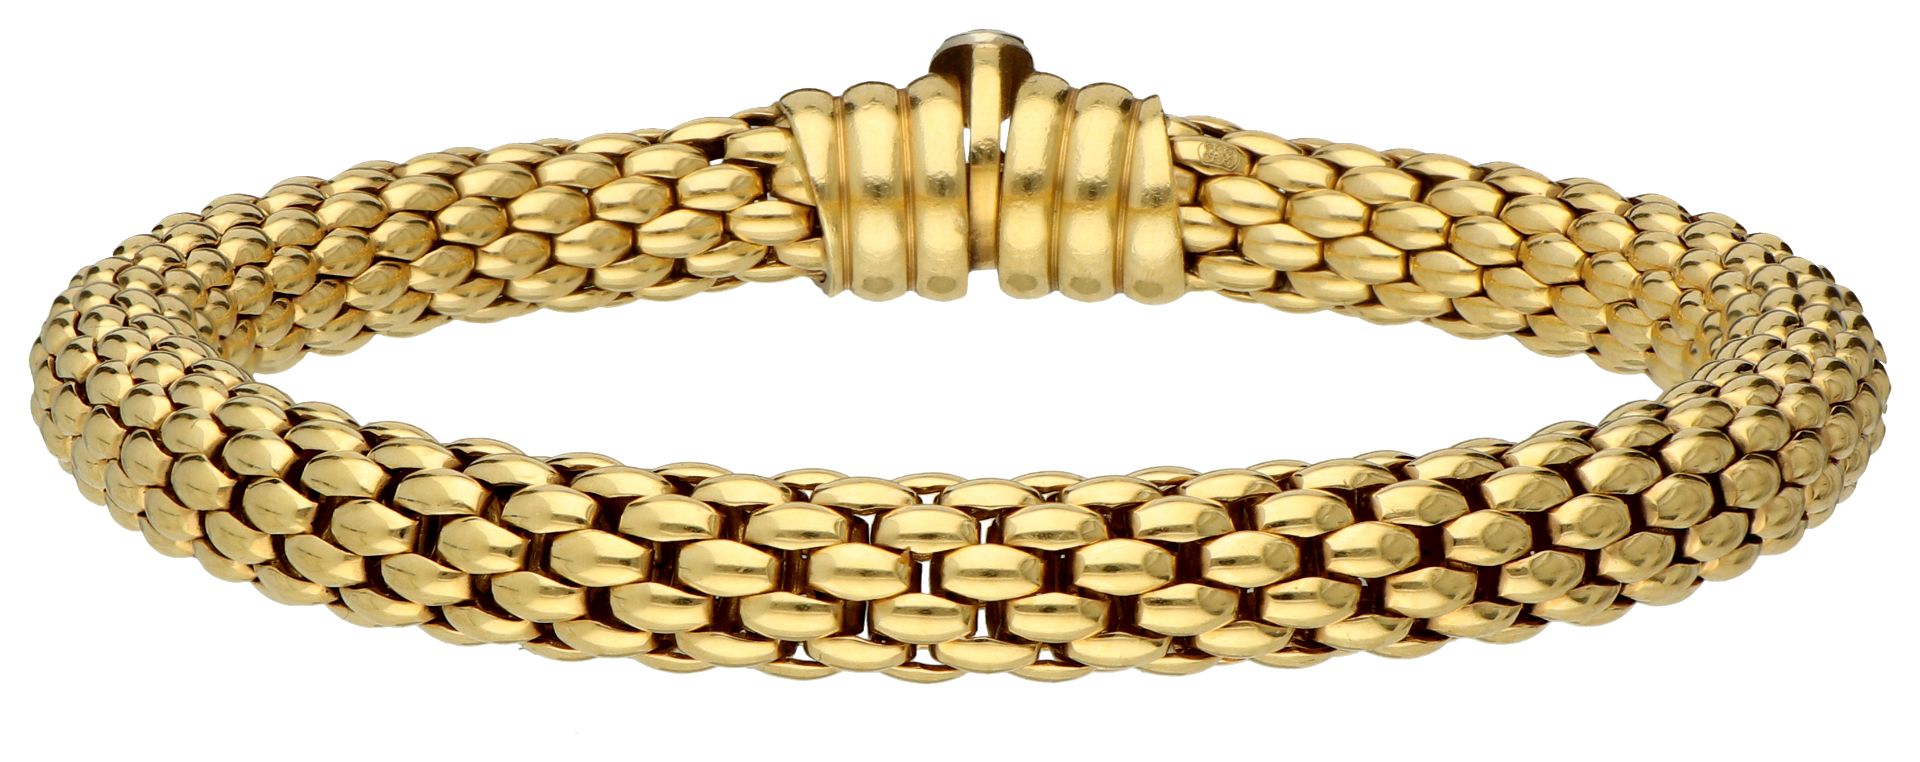 No Reserve - Fope 18K yellow gold mesh bracelet